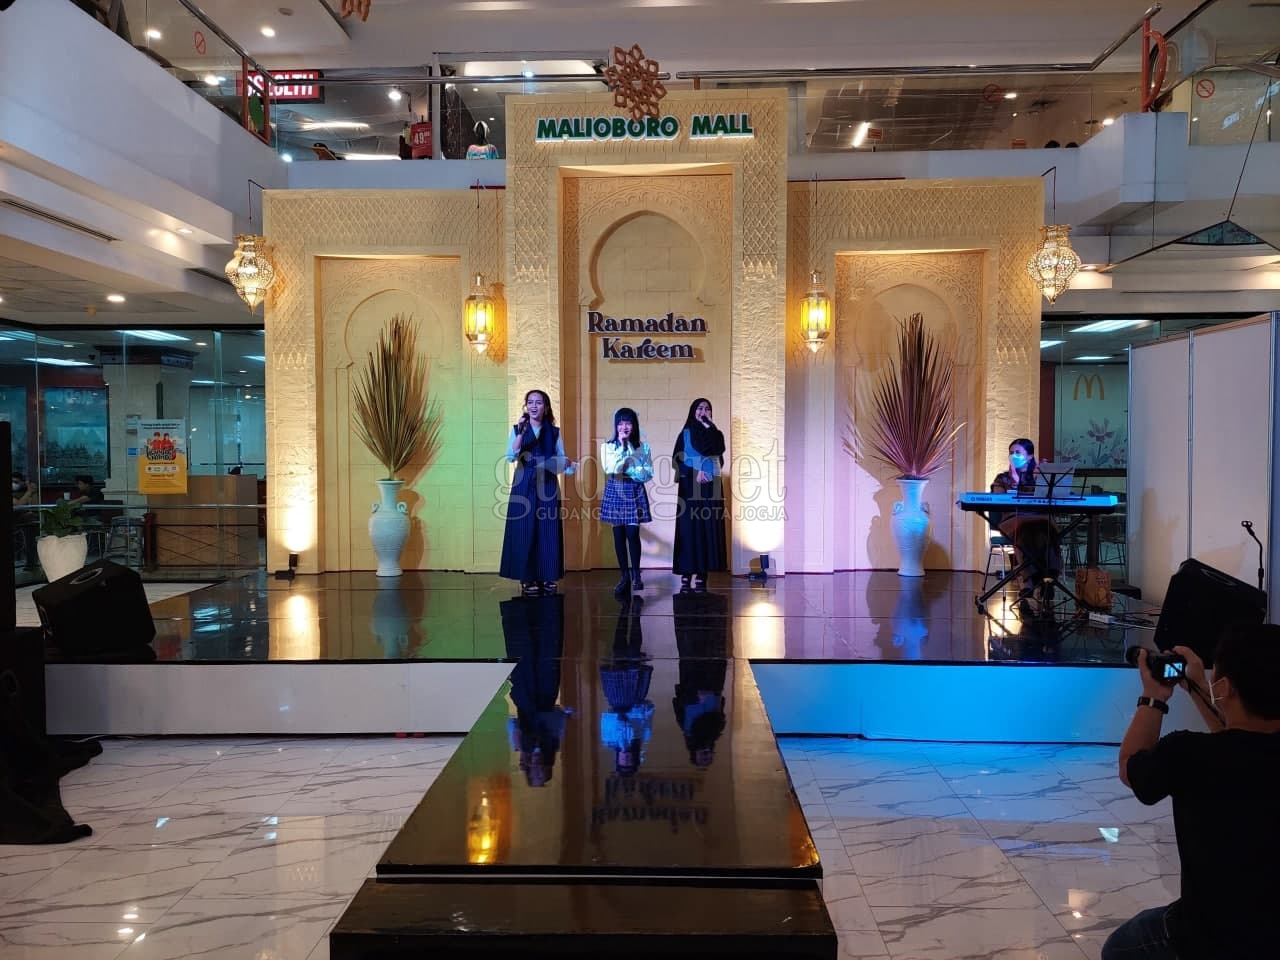 Malioboro Mall Hadirkan 'Ramadan Kareem'